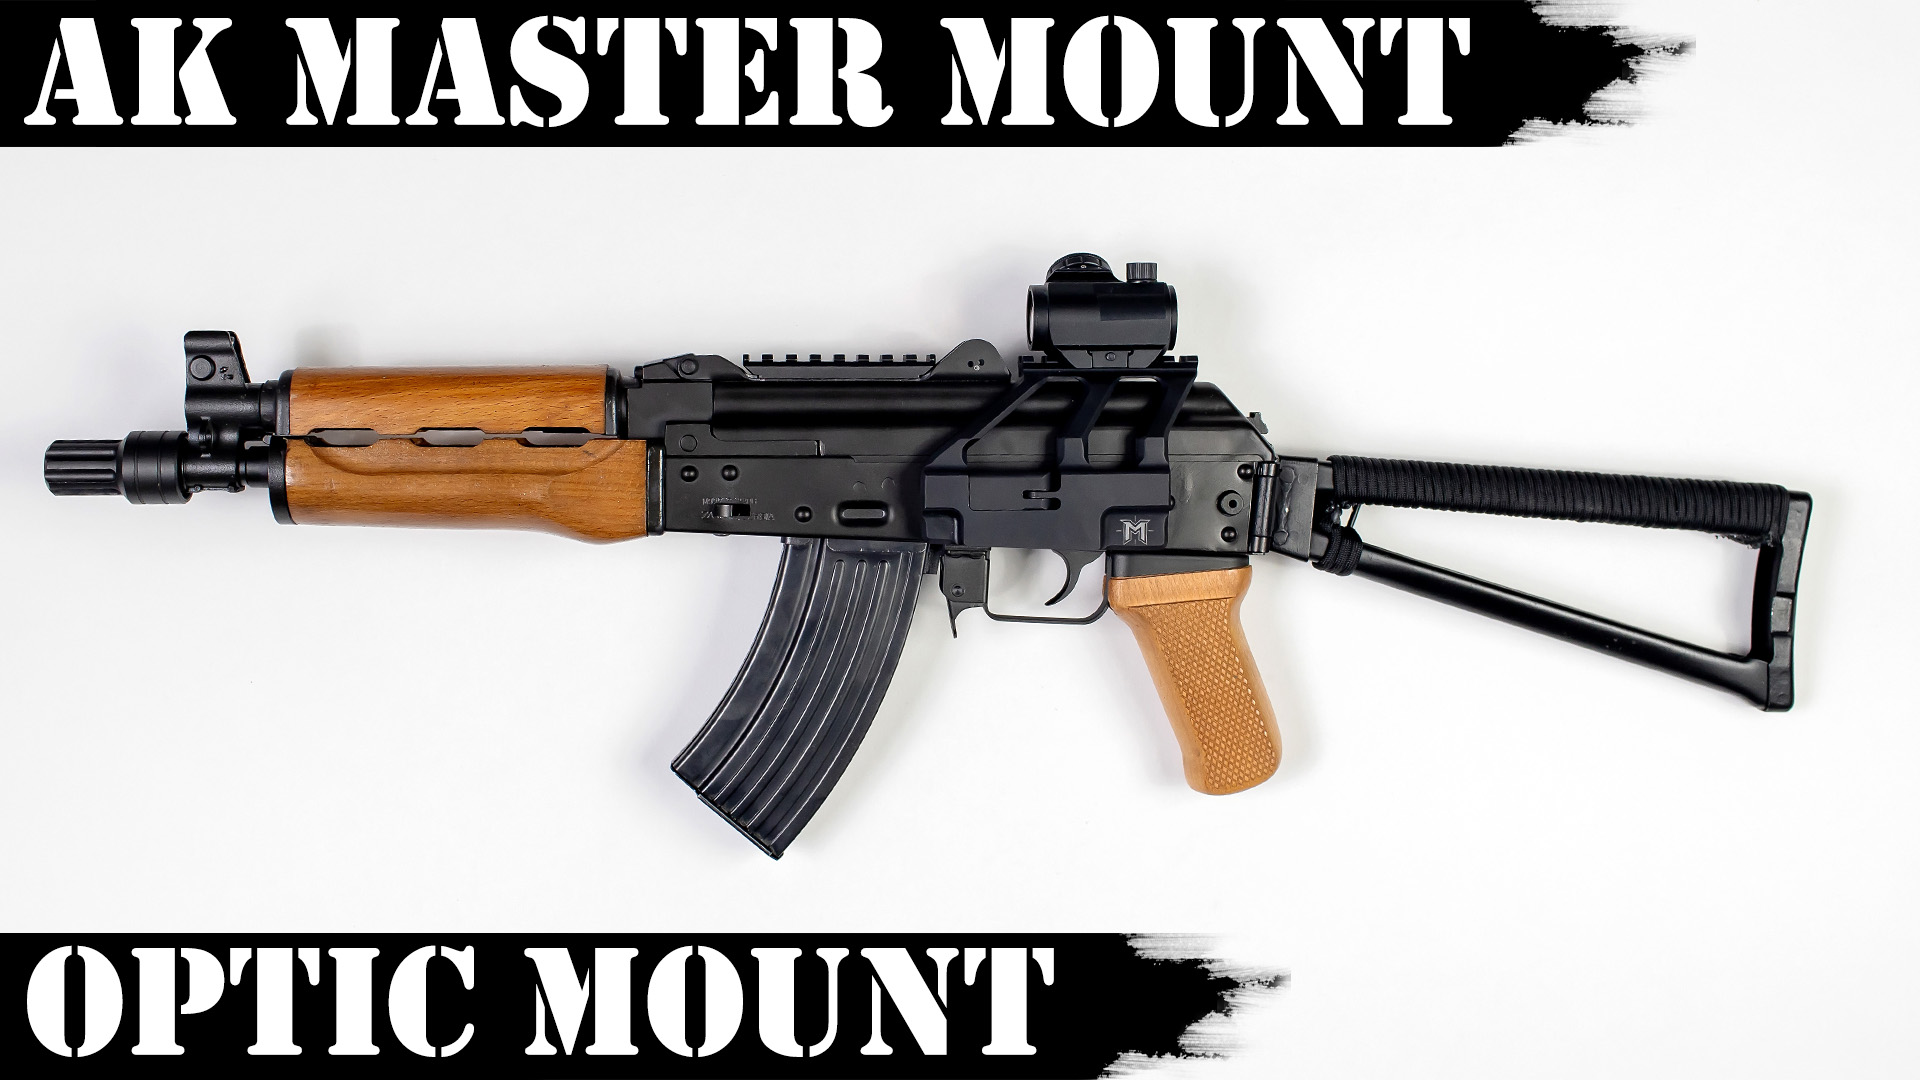 AK Master Mount – Awesome Optic Mount? Does it HOLD ZERO?